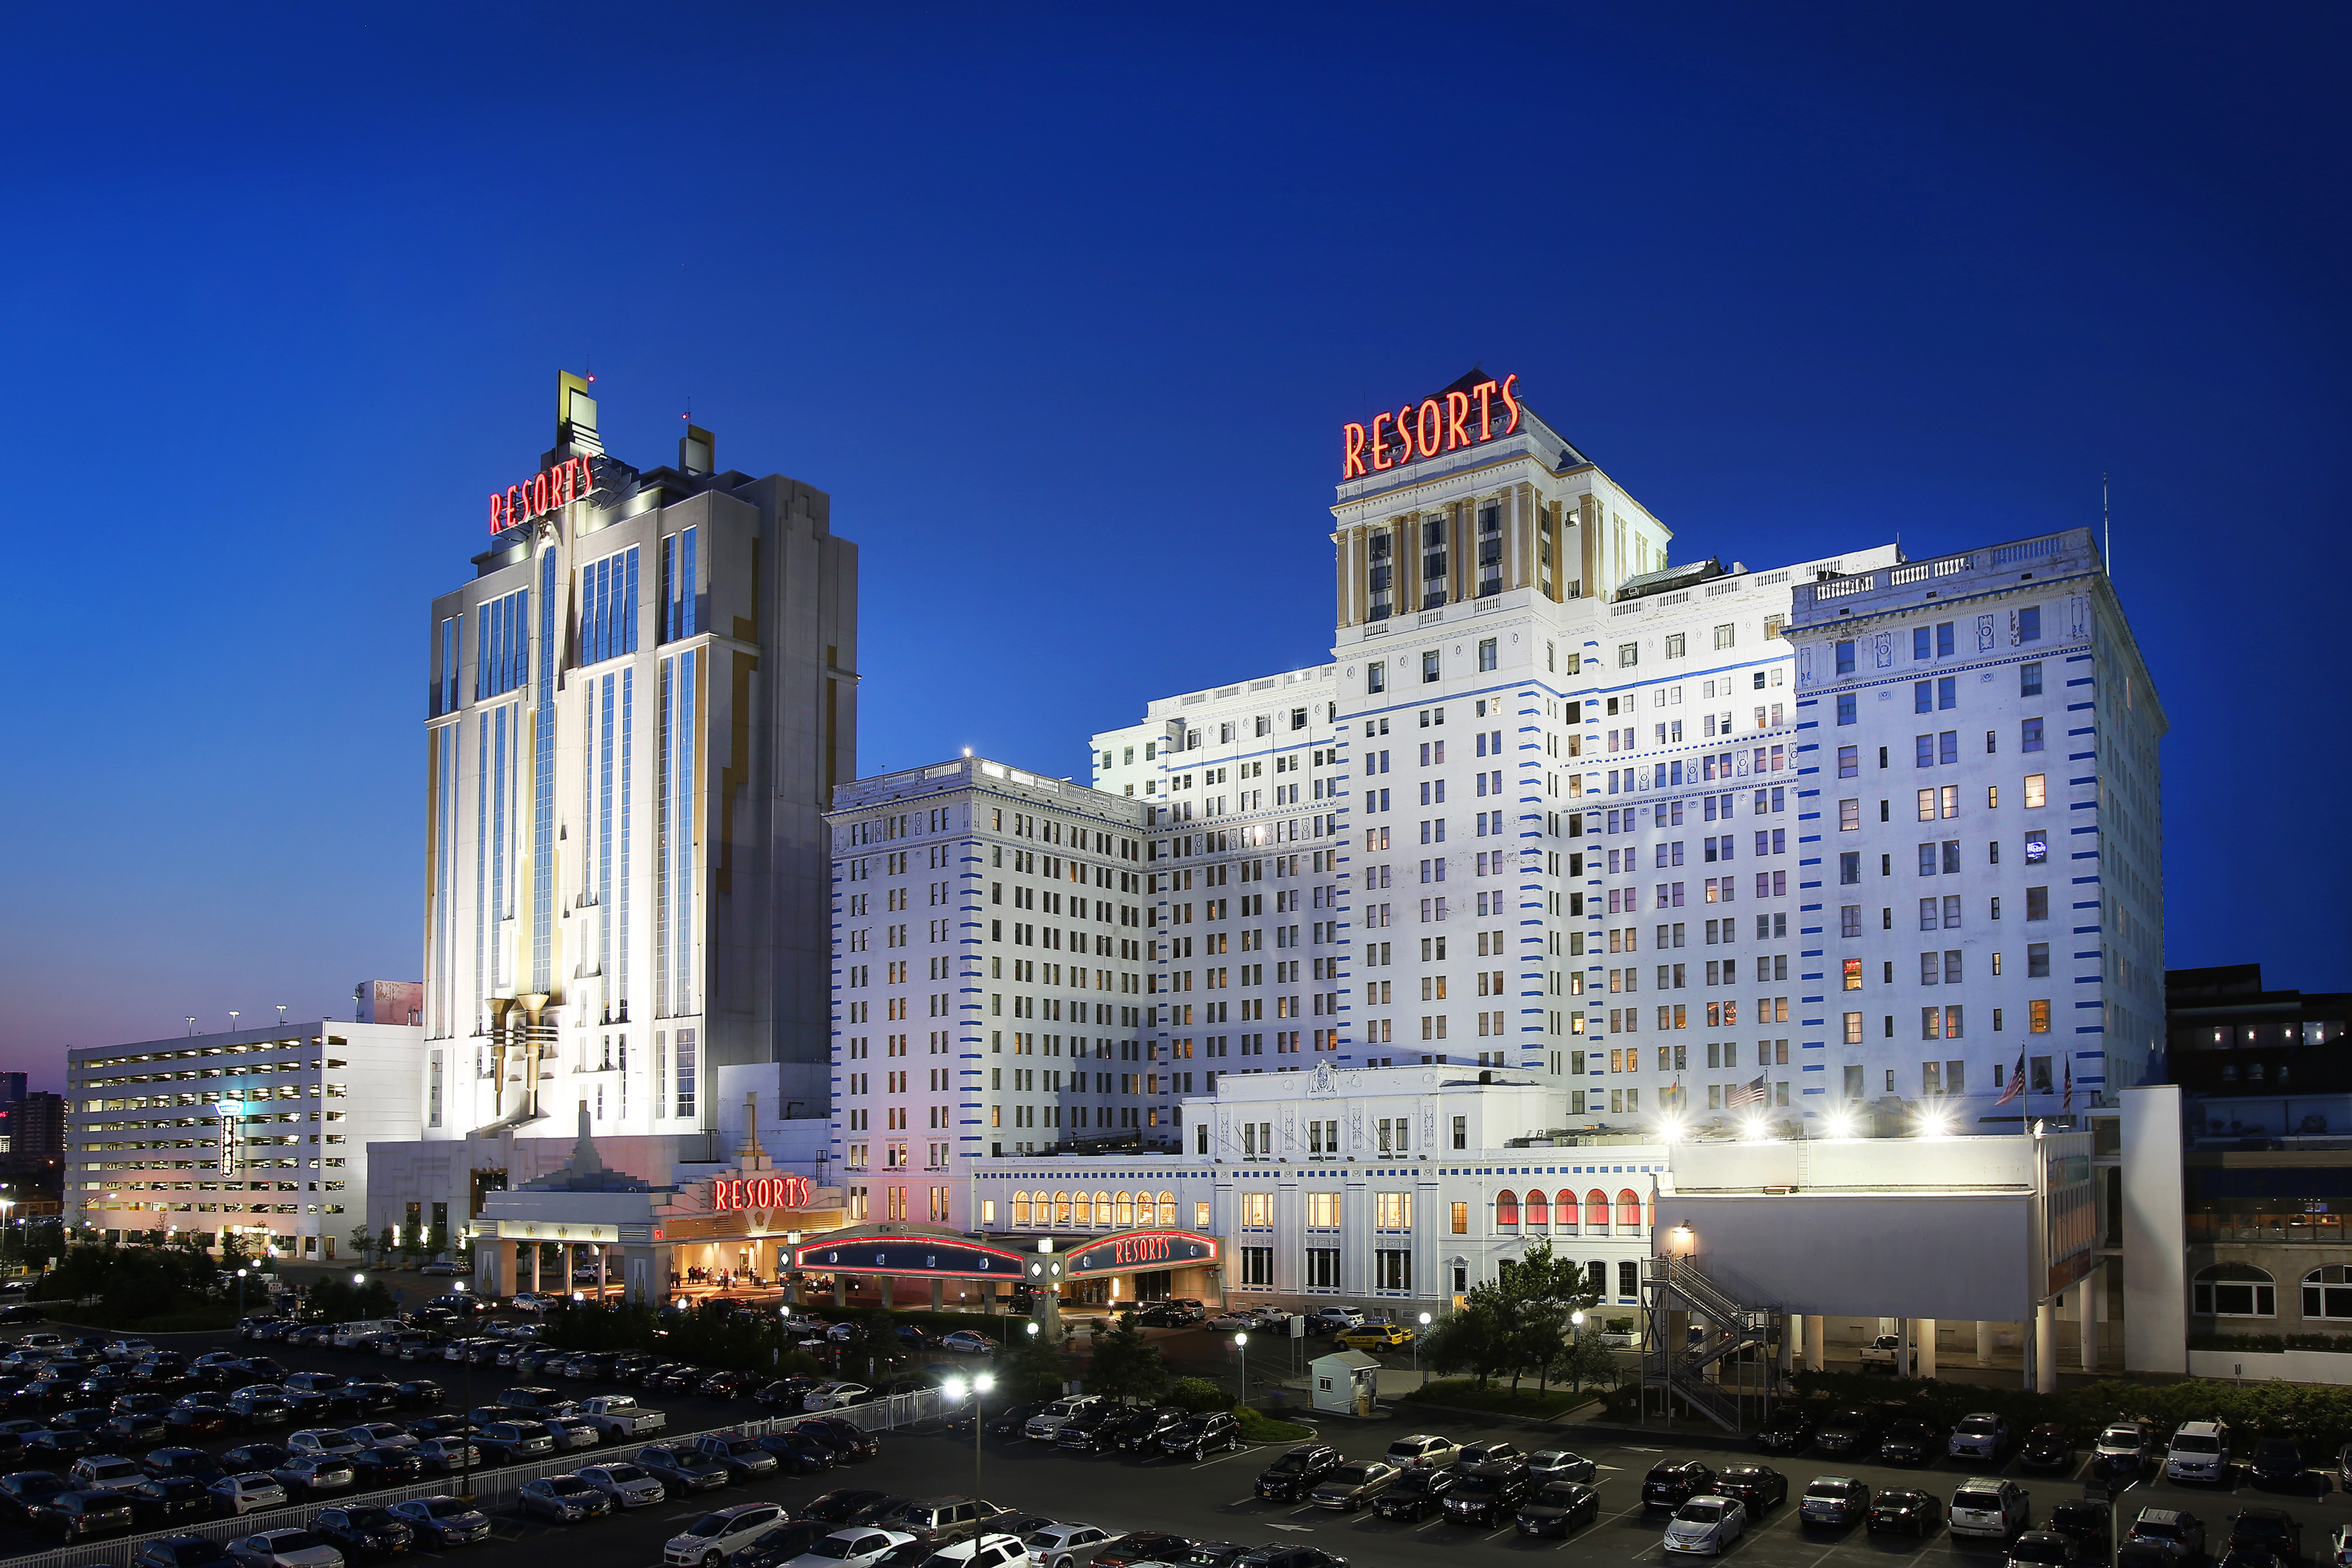 Resorts Hotel Atlantic City,N.J image